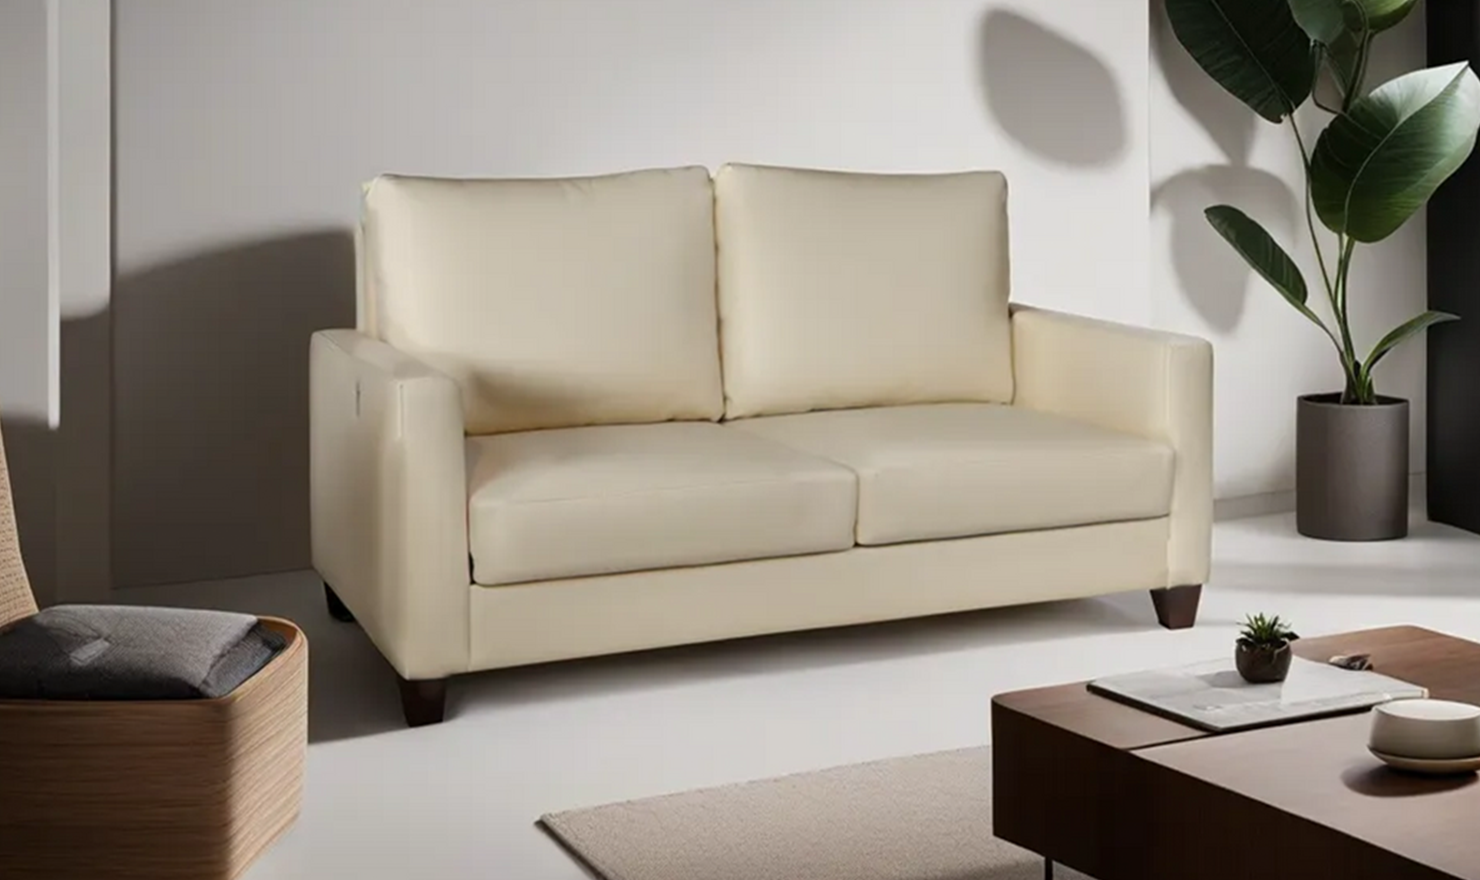 Nova Queen Leather Sleeper Sofa